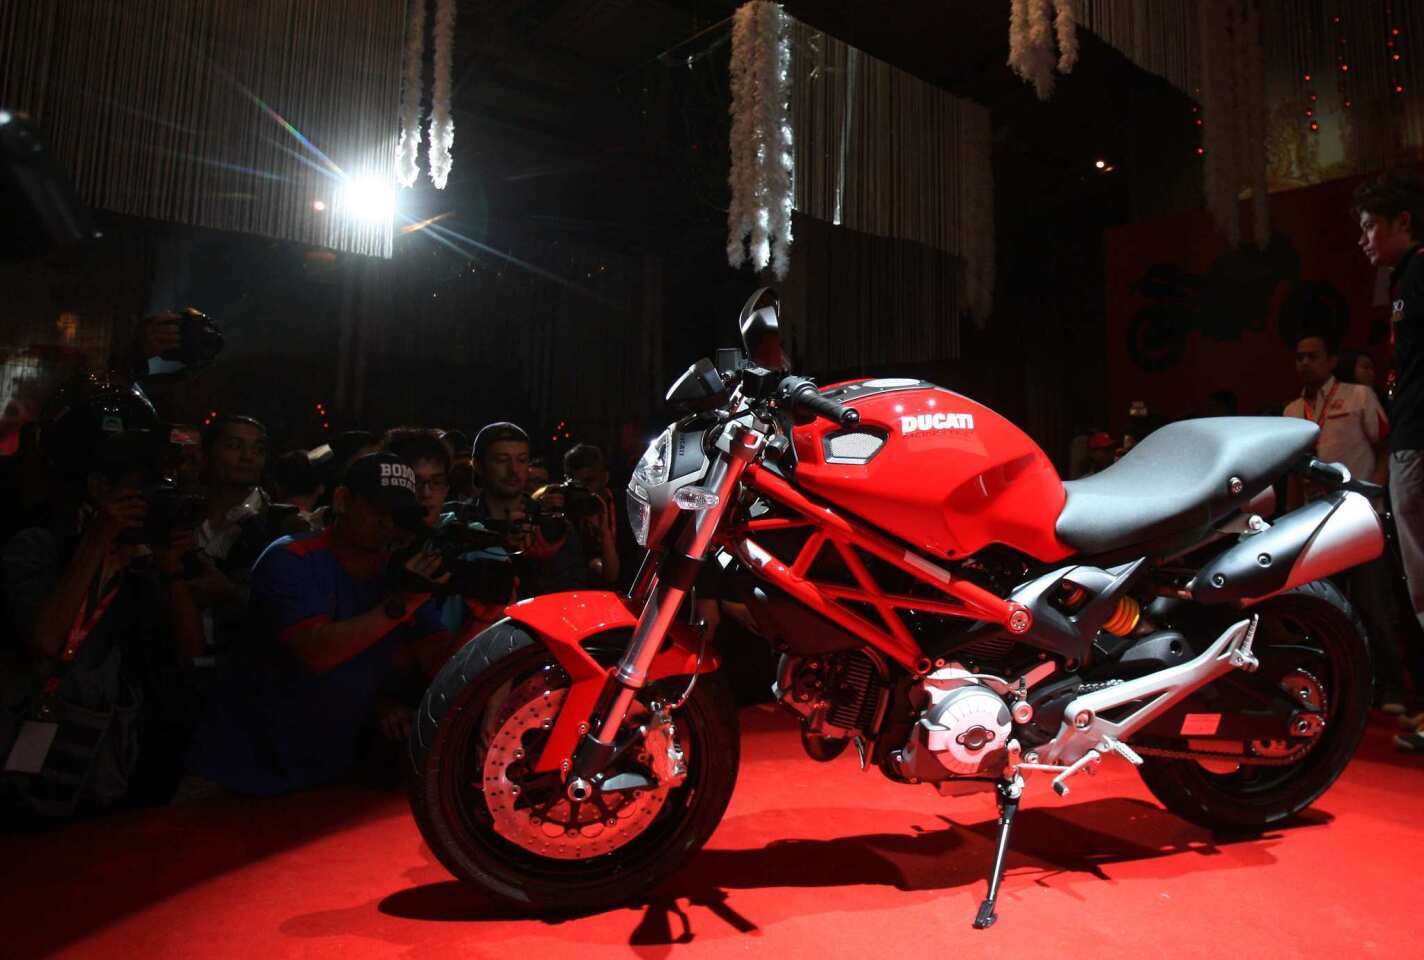 Ducati's new Monster 795 is unveiled in Kuala Lumpur, Malaysia.